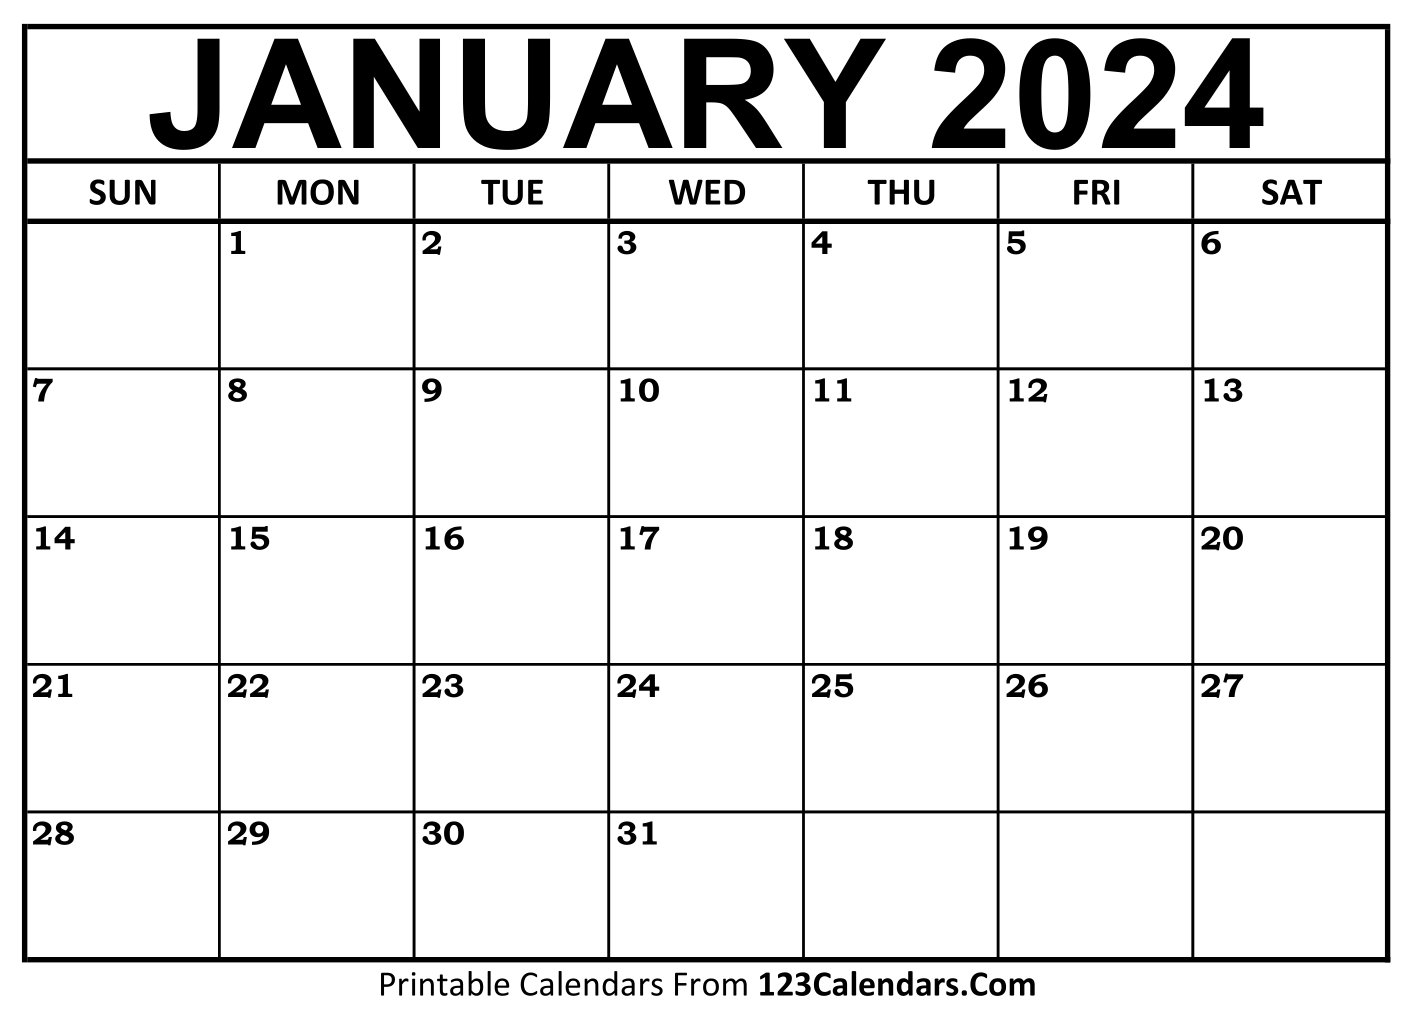 Printable January 2024 Calendar Templates - 123Calendars for Free Printable January 2024 Calendar Wiki